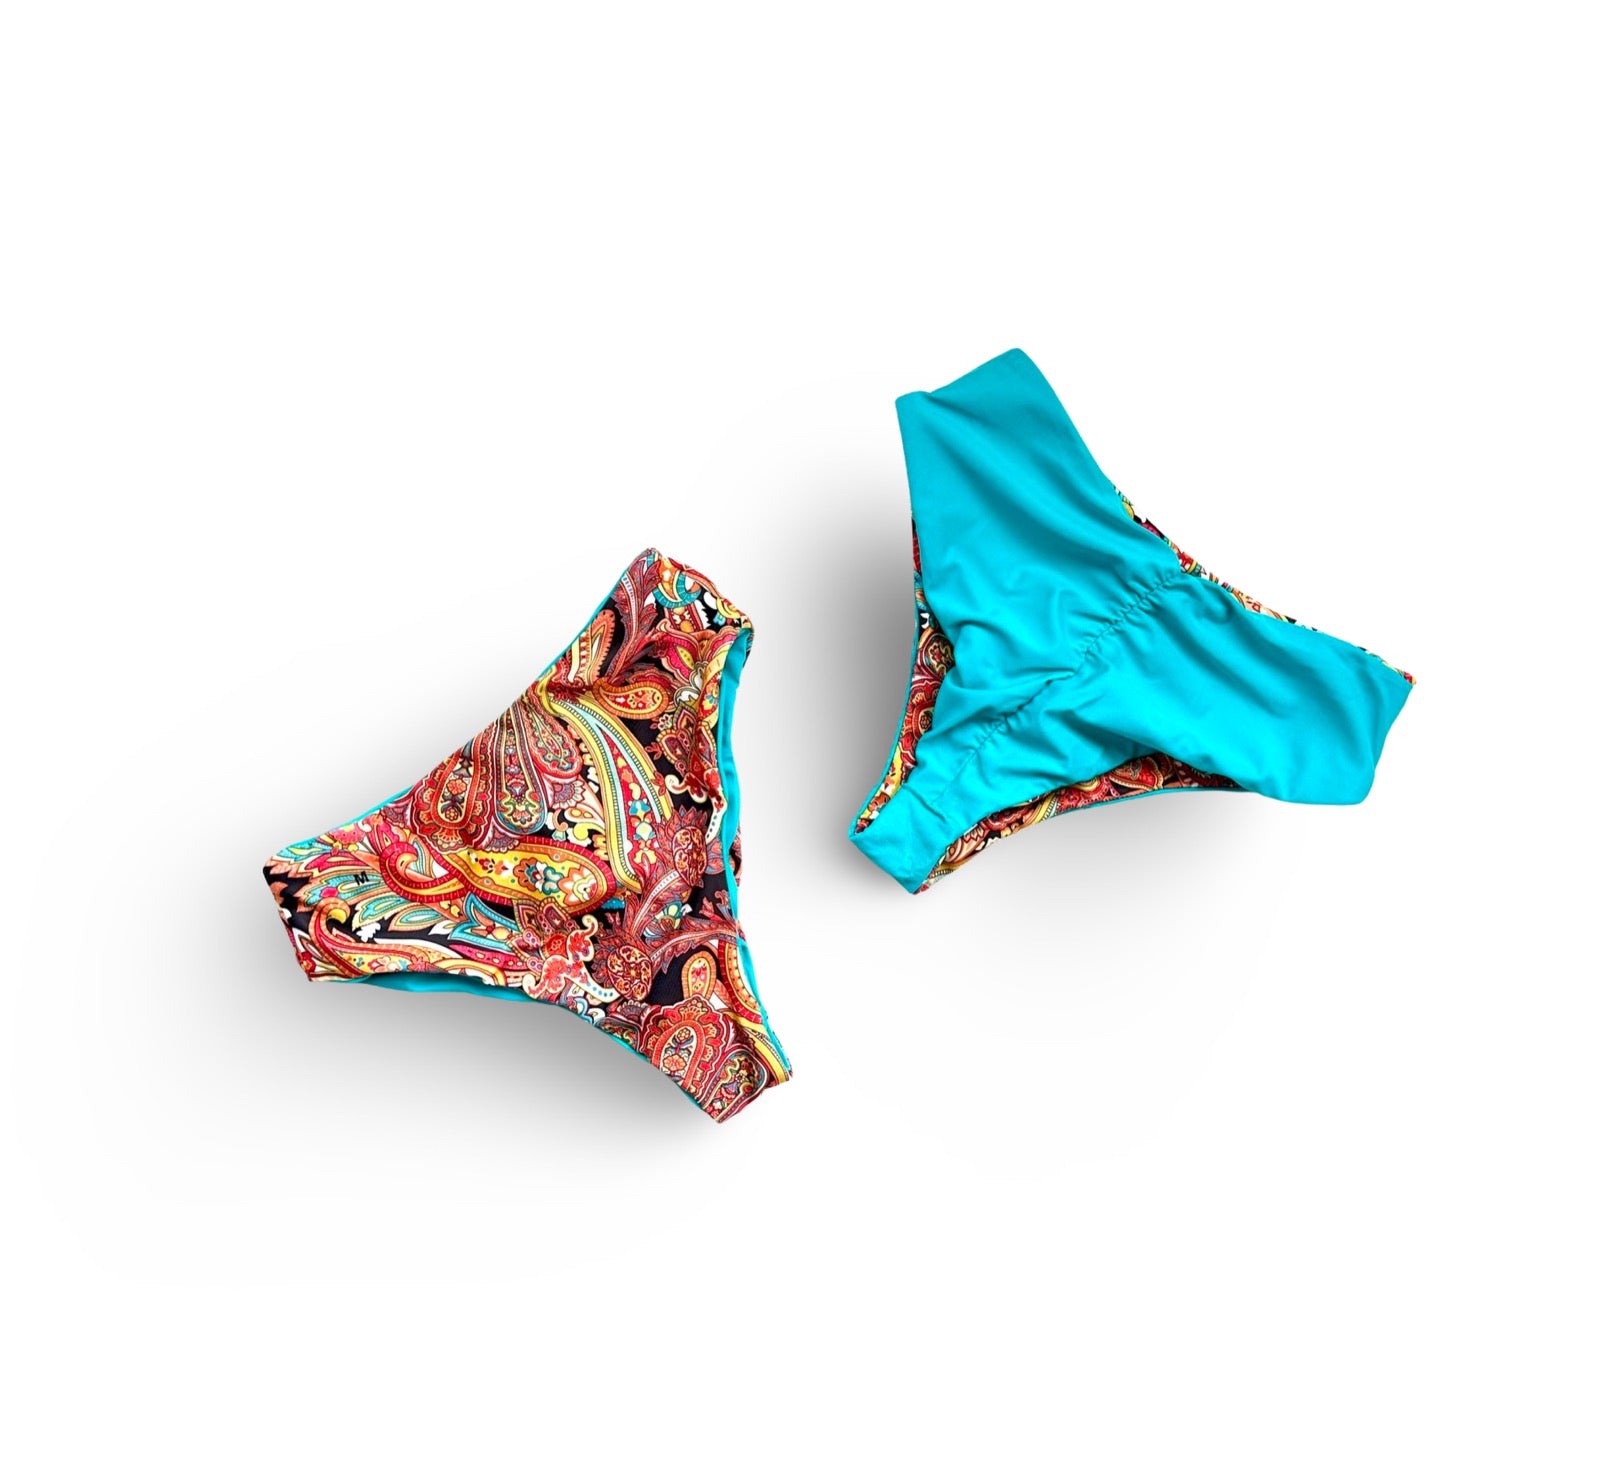 Reversible High waist cheeky bikini bottoms by Bikini Flavors shown in Oolong.  Turquoise reverses to paisley print.  American Made. 